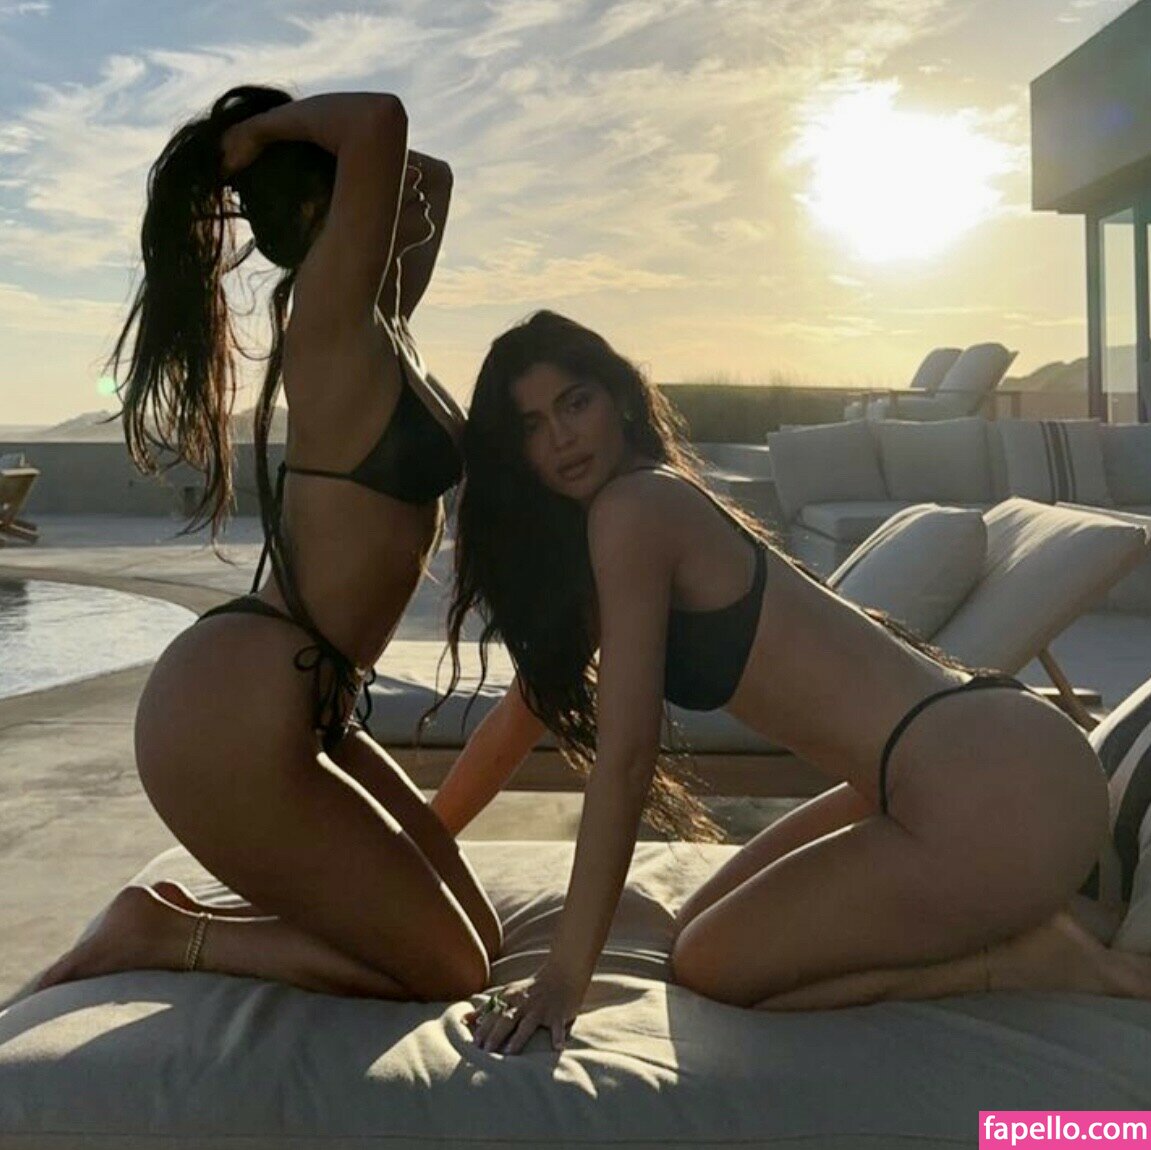 https://fapello.com/content/k/i/kim-kardashian/2000/kim-kardashian_1330.jpg